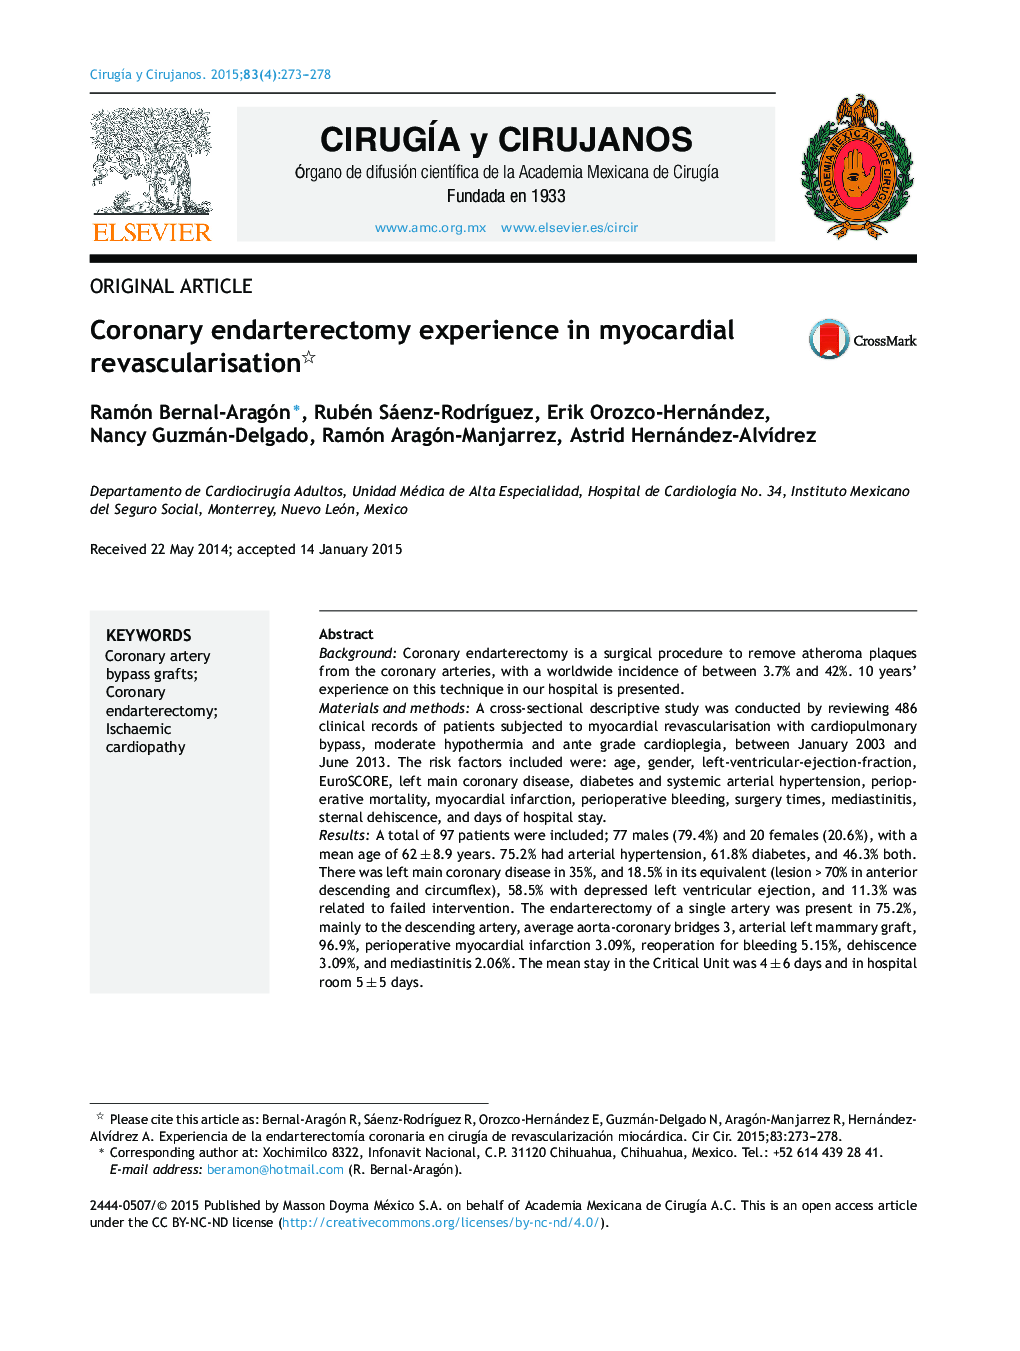 Coronary endarterectomy experience in myocardial revascularisation 